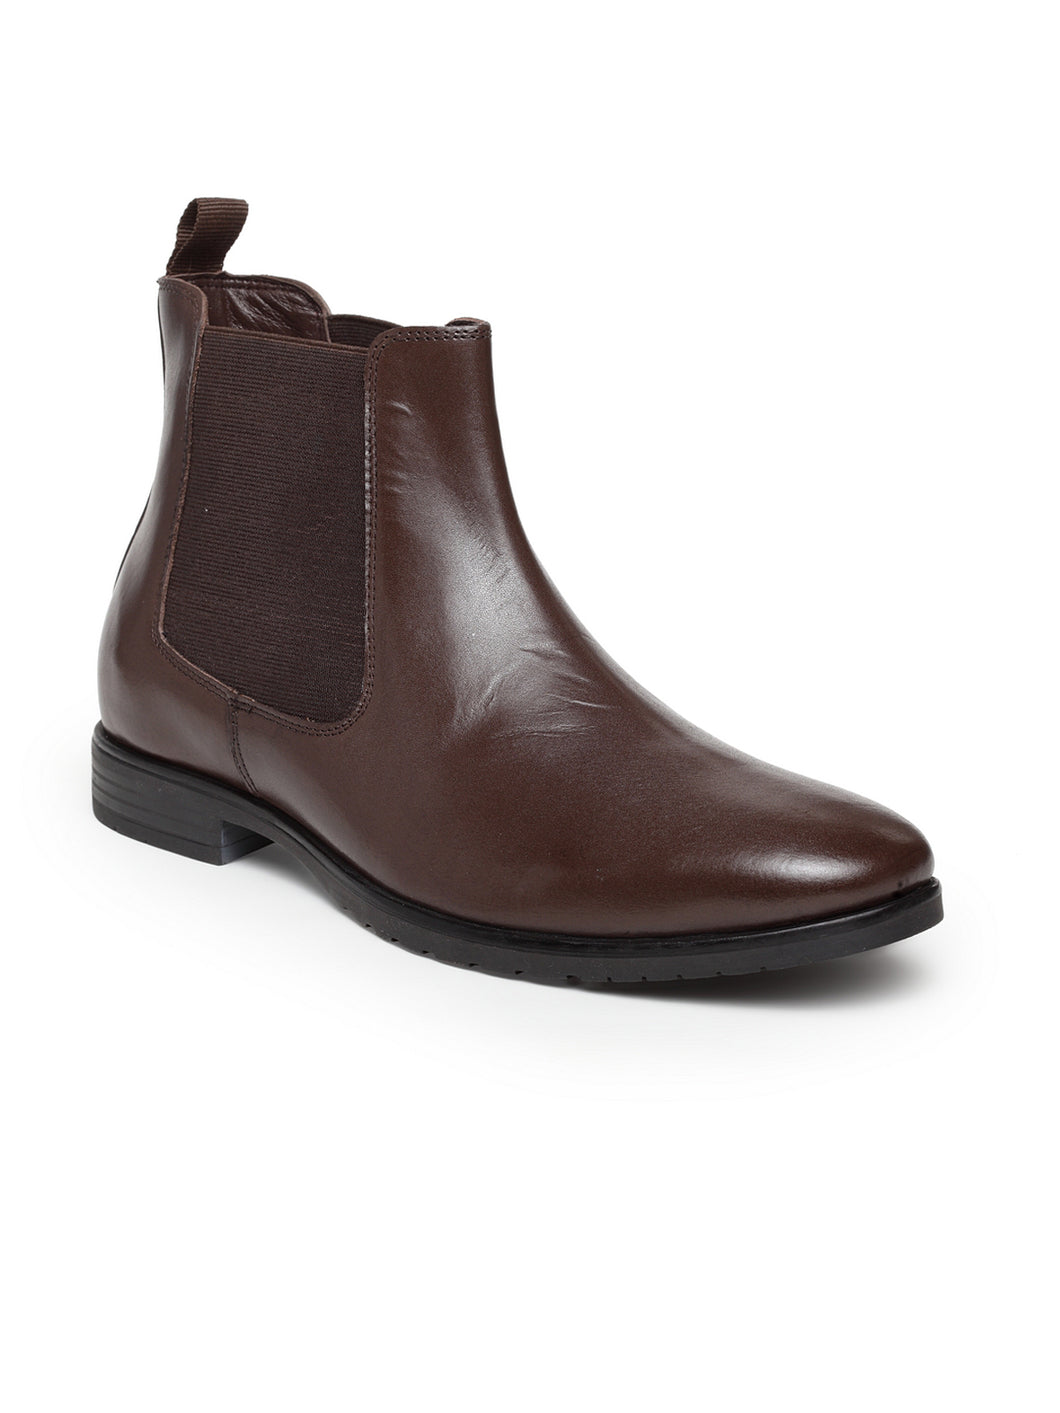 Teakwood Leathers Men's Brown Chelsea Boots